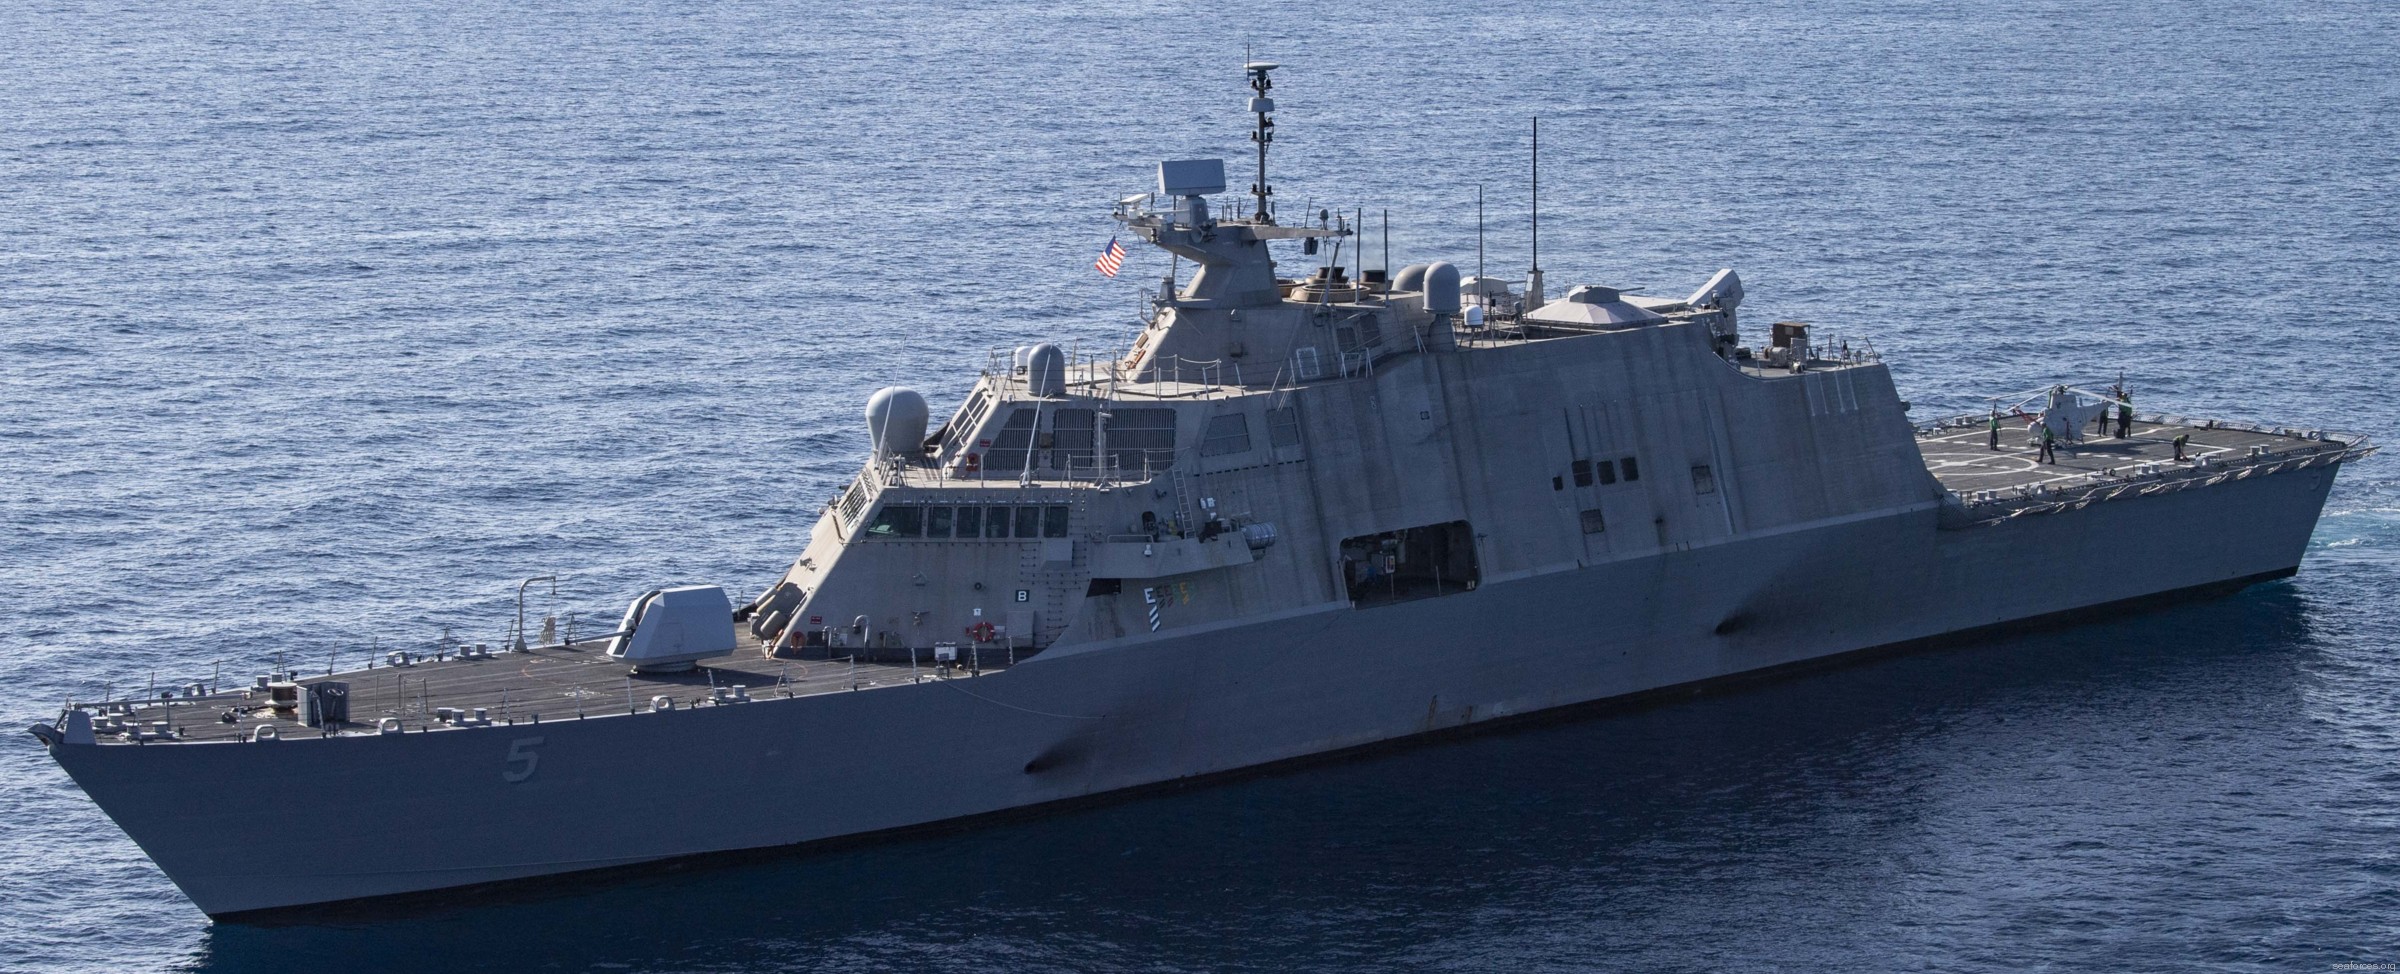 lcs-5 uss milwaukee freedom class littoral combat ship navy 19